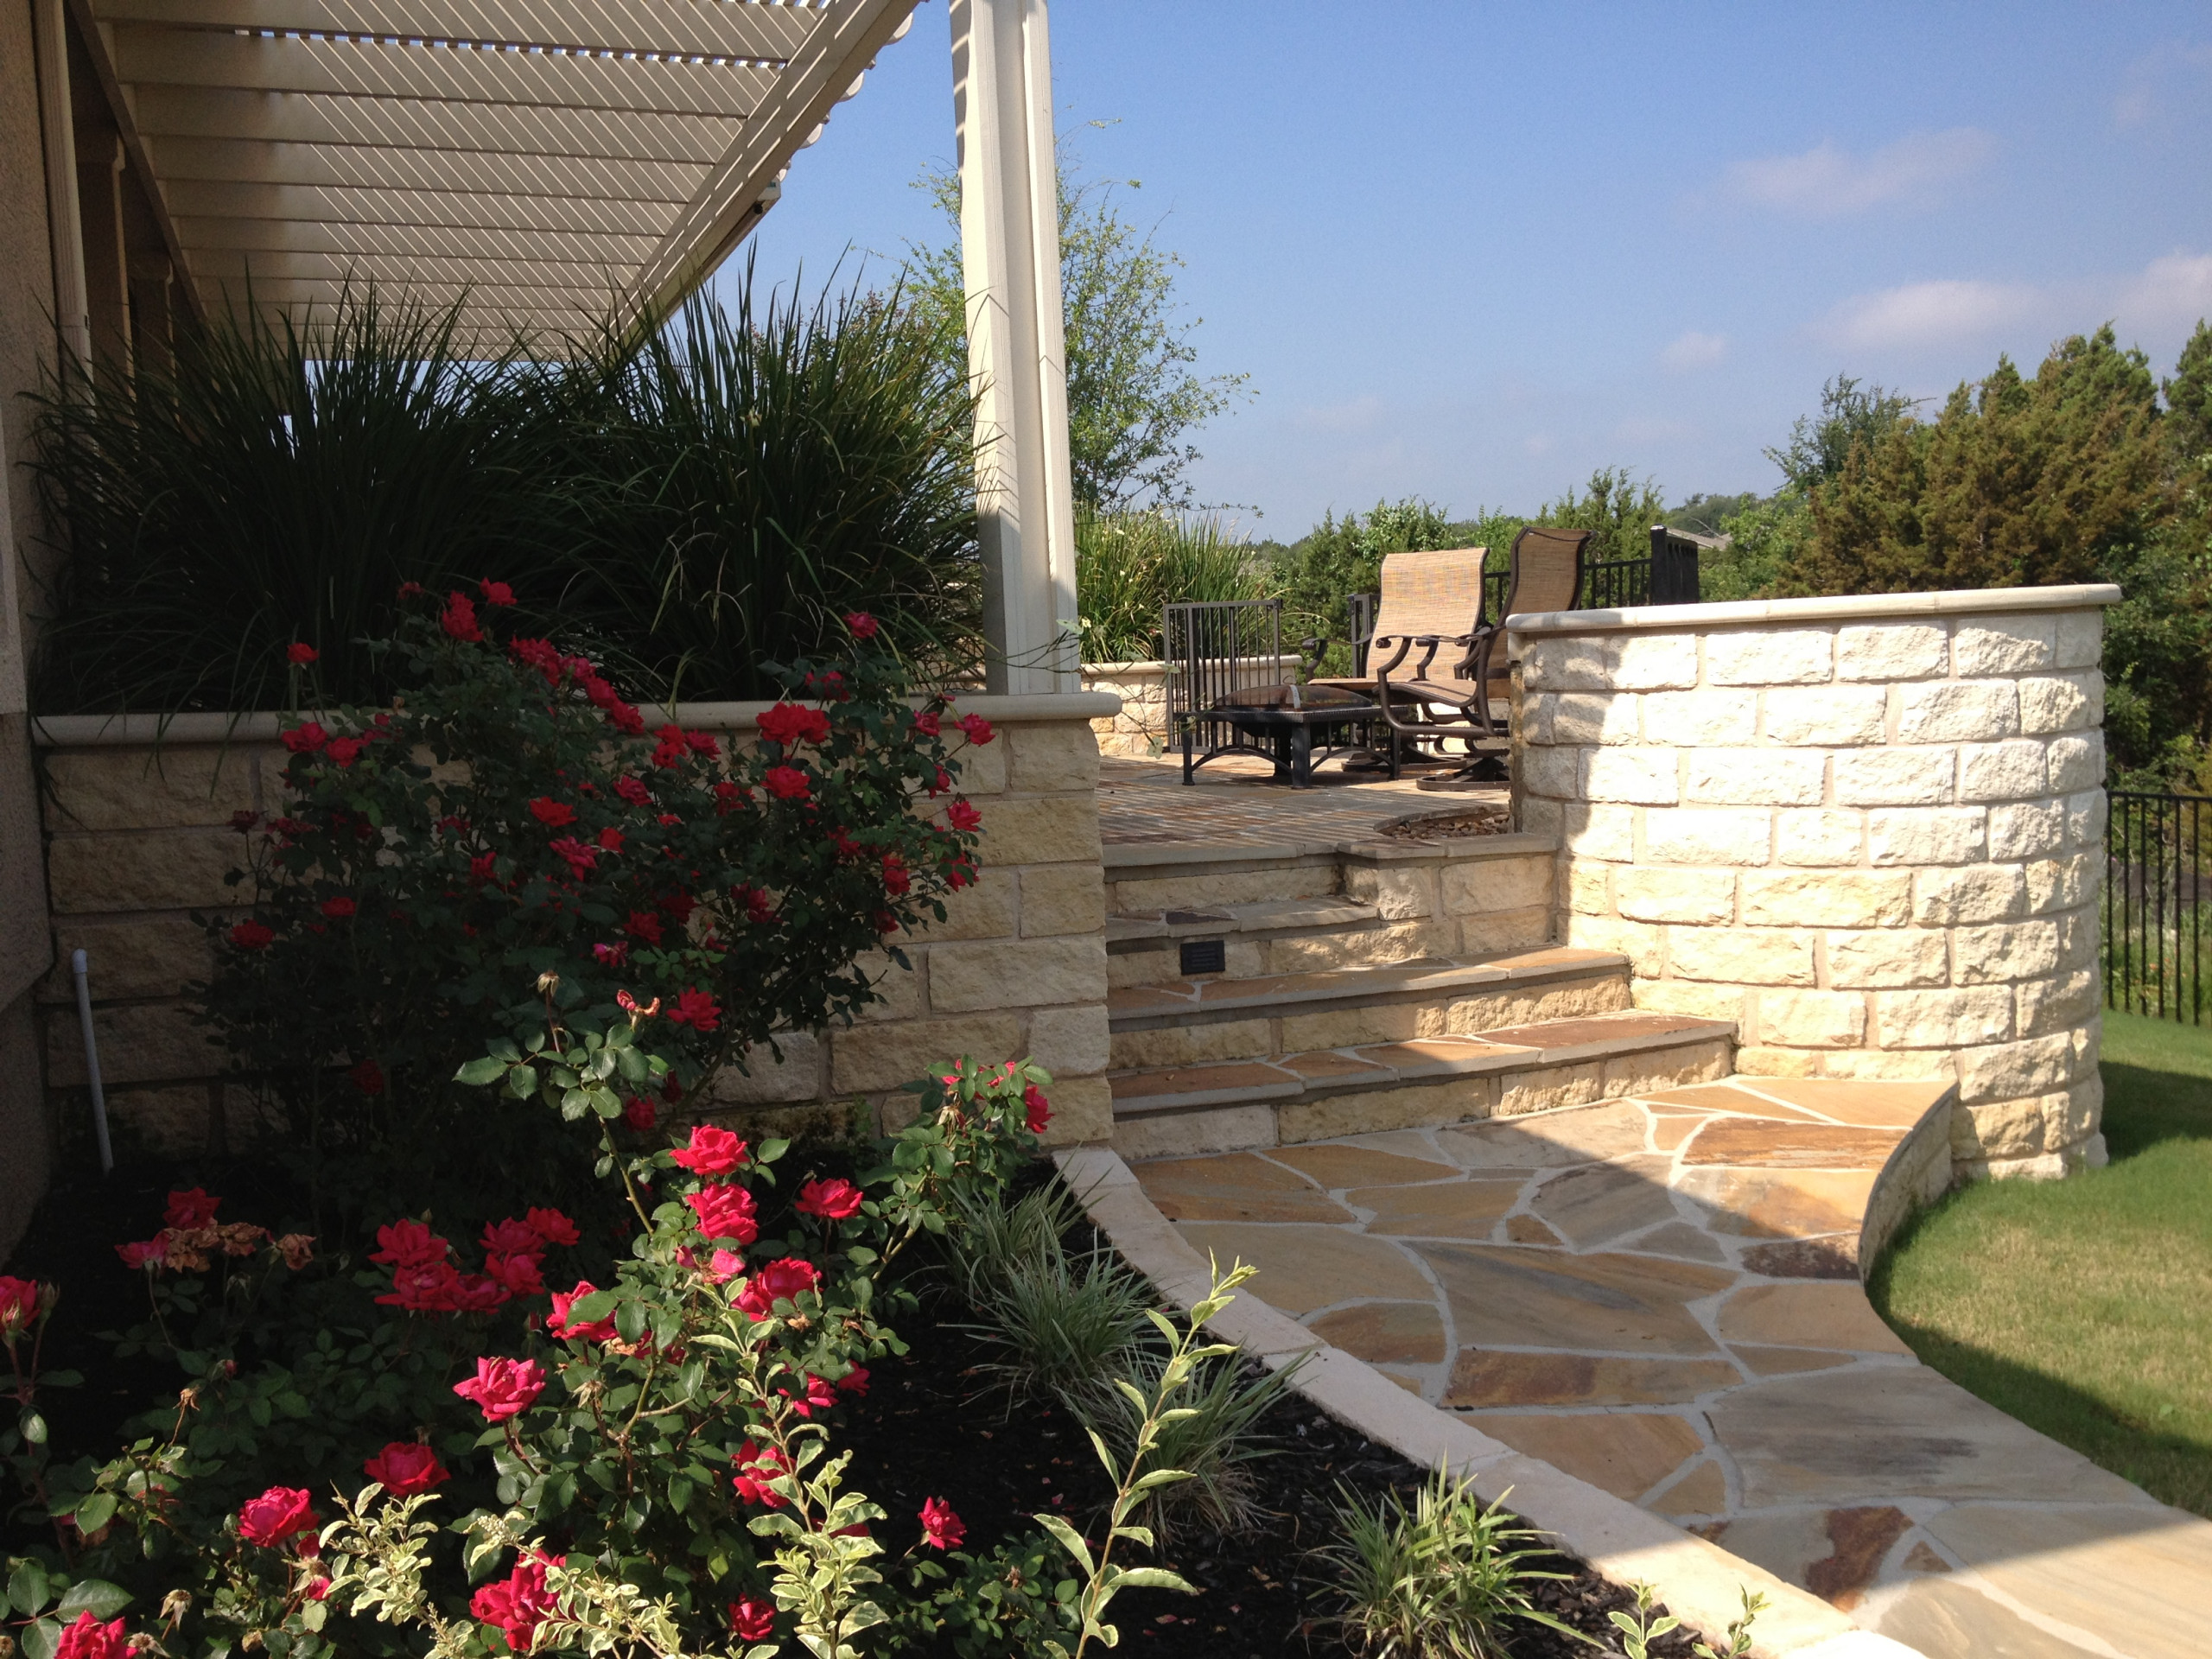 Oklahoma flagstone patio w/ raised "round" limestone beds and Alumawood "diffuse